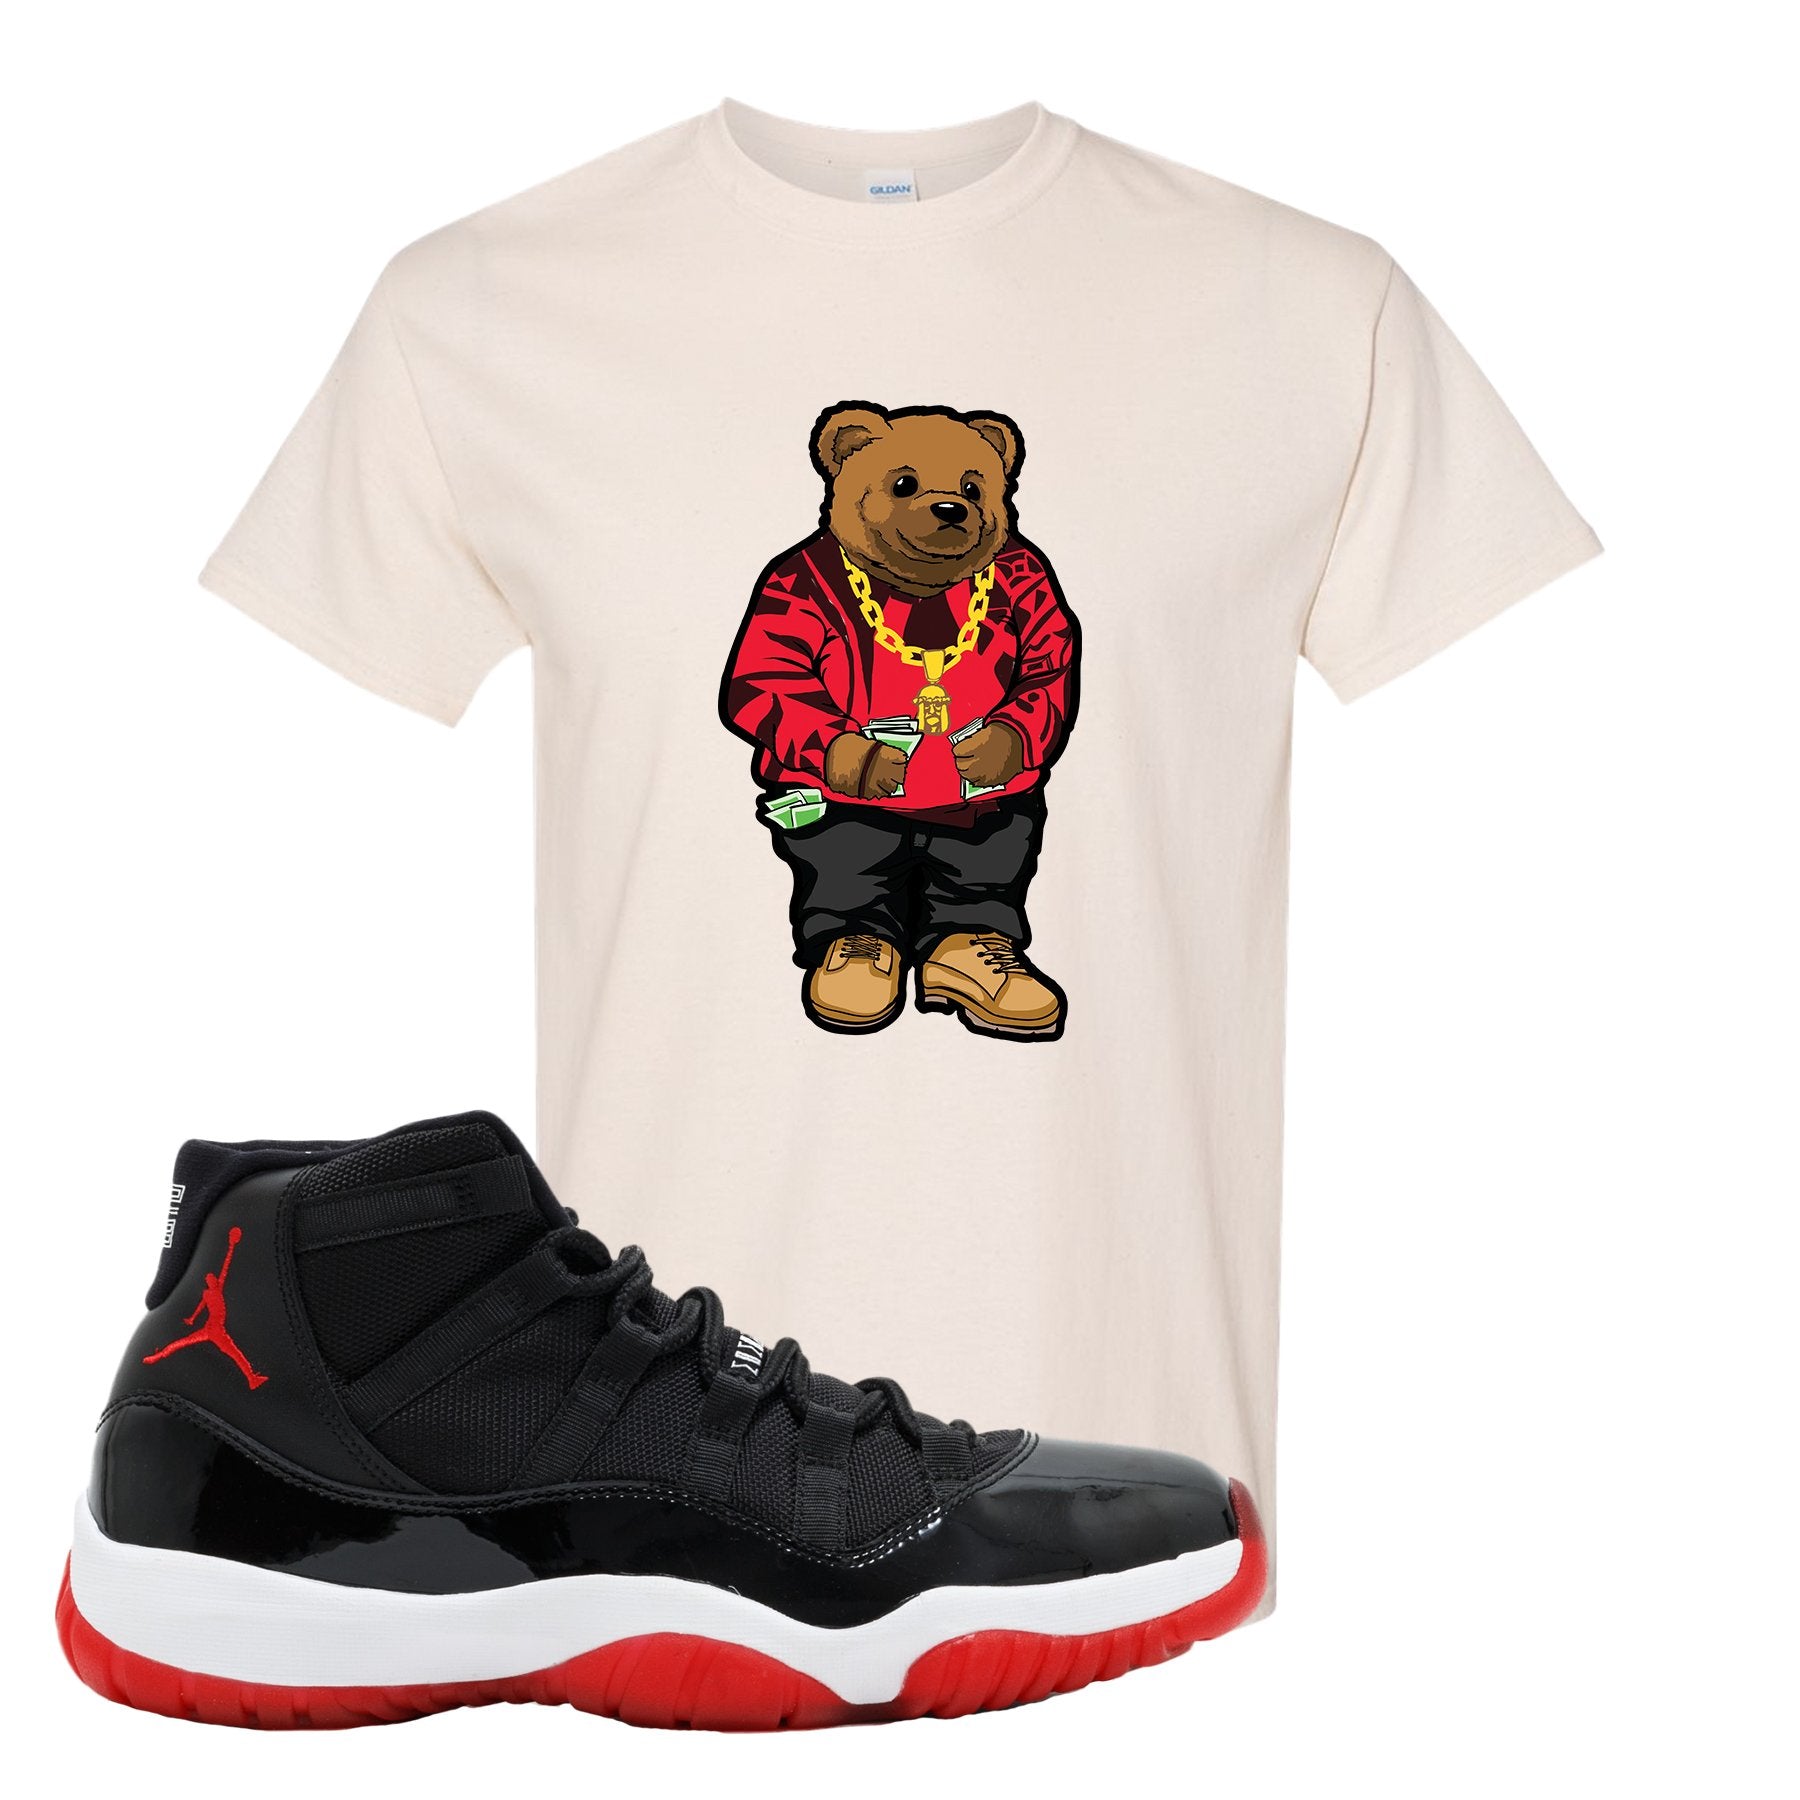 Jordan 11 Bred Sweater Bear White Sneaker Hook Up T-Shirt